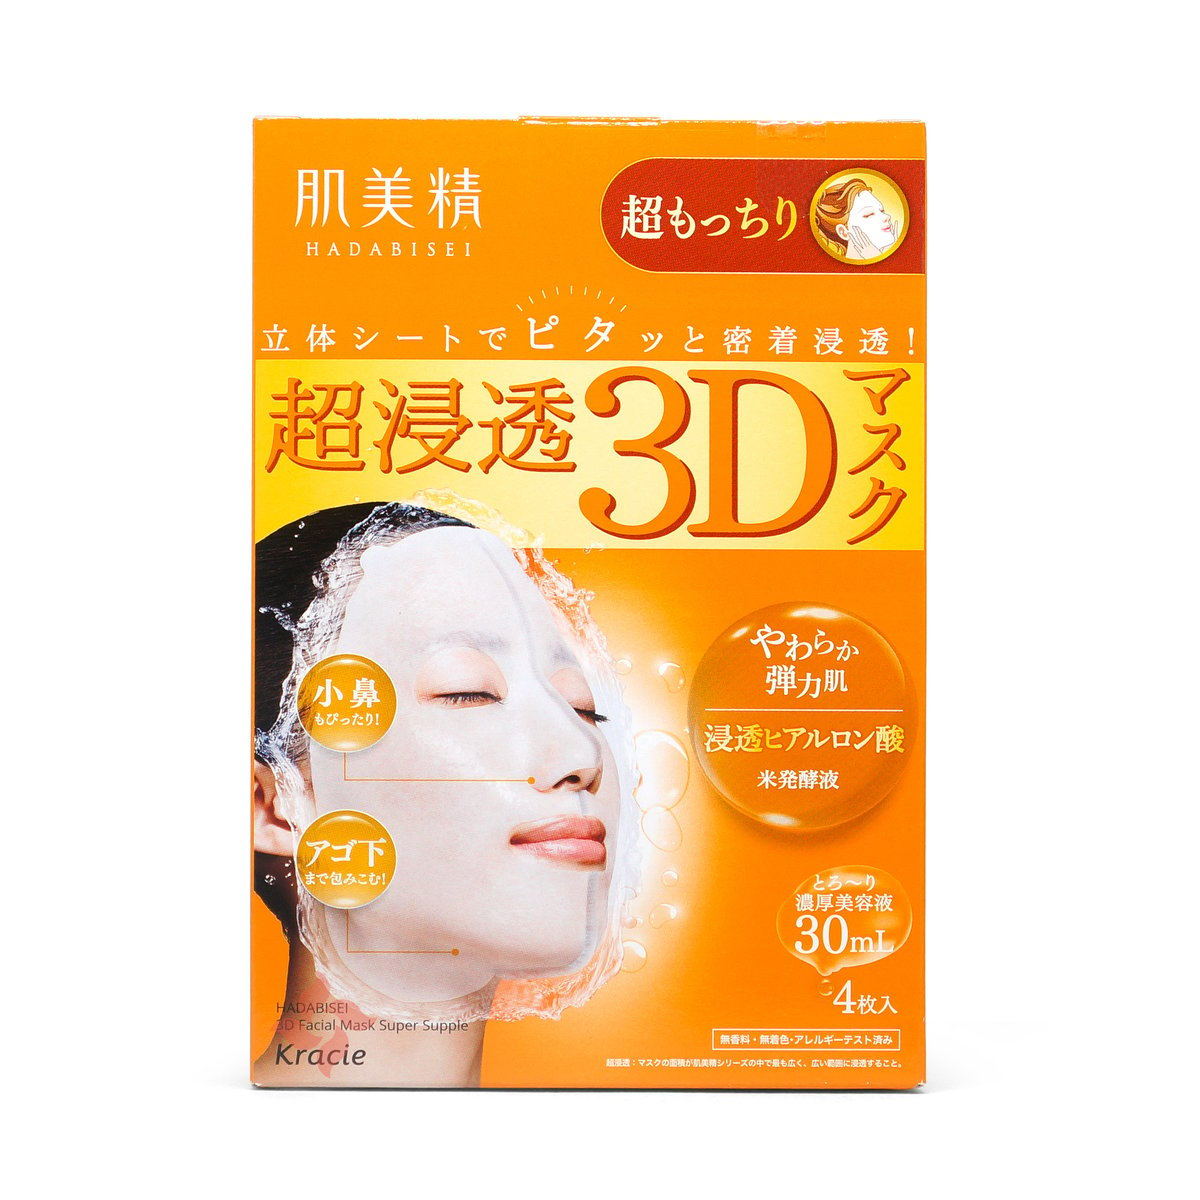 Kracie Hadabisei 3D Super Moisturizing Facial Mask, 4 sheets - Or